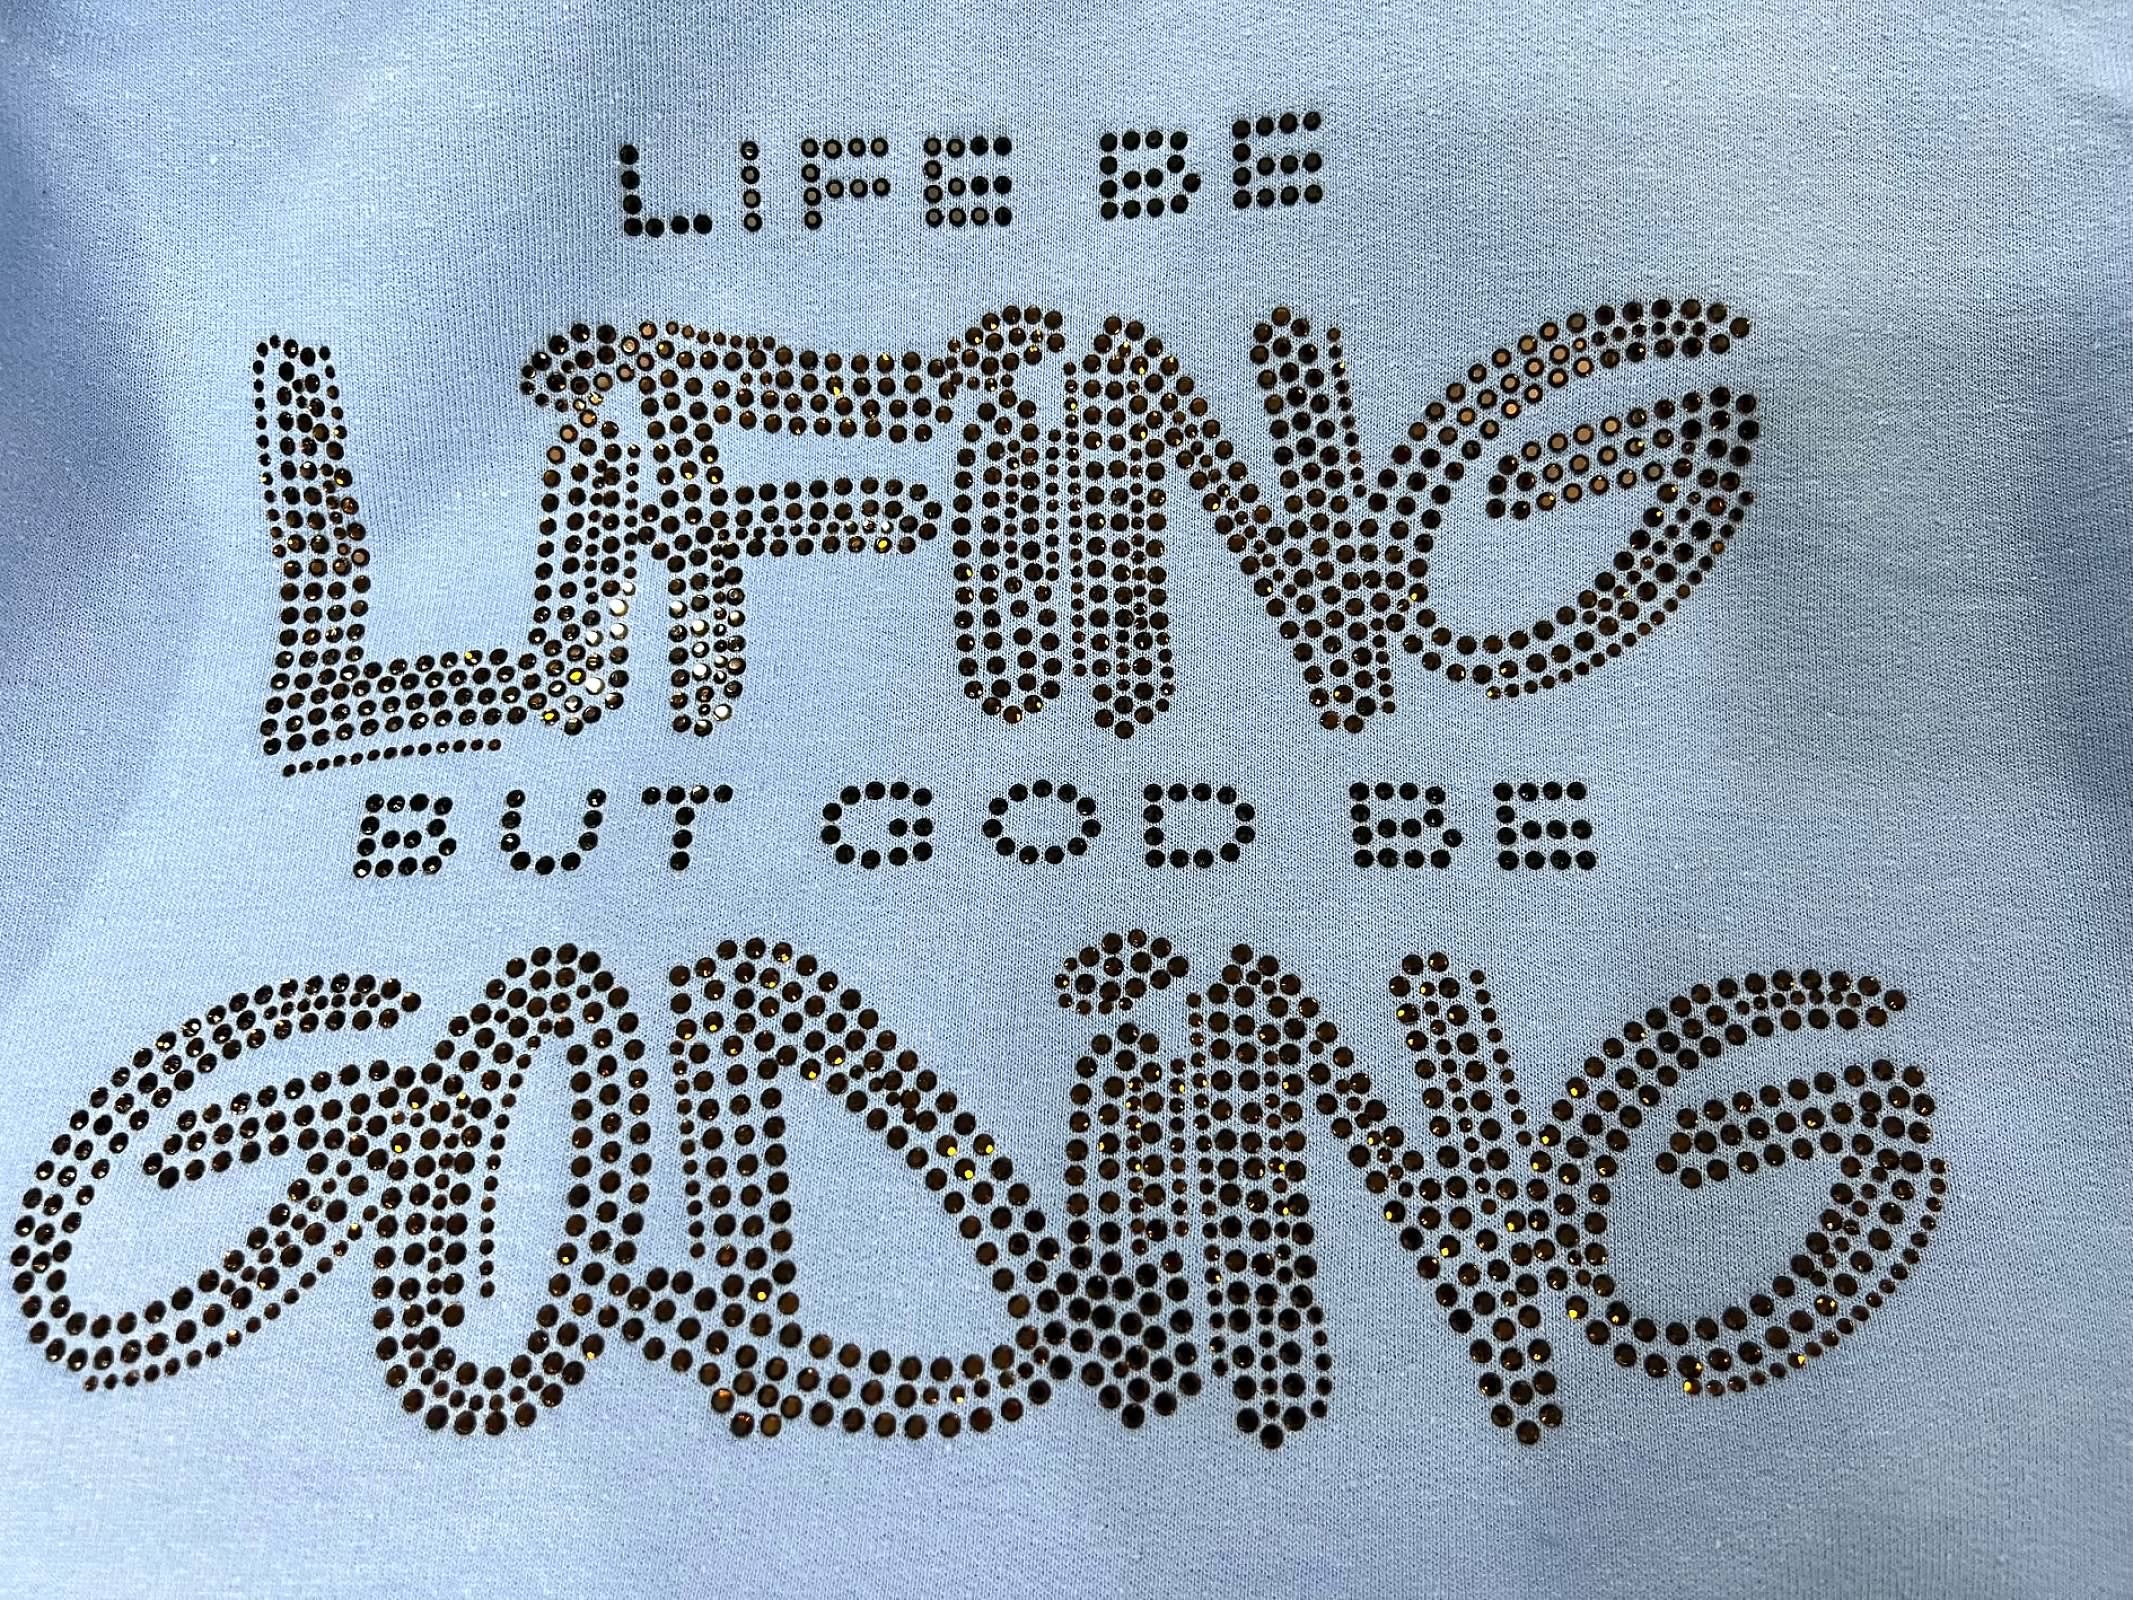 Life Be Lifen…But God be Goding